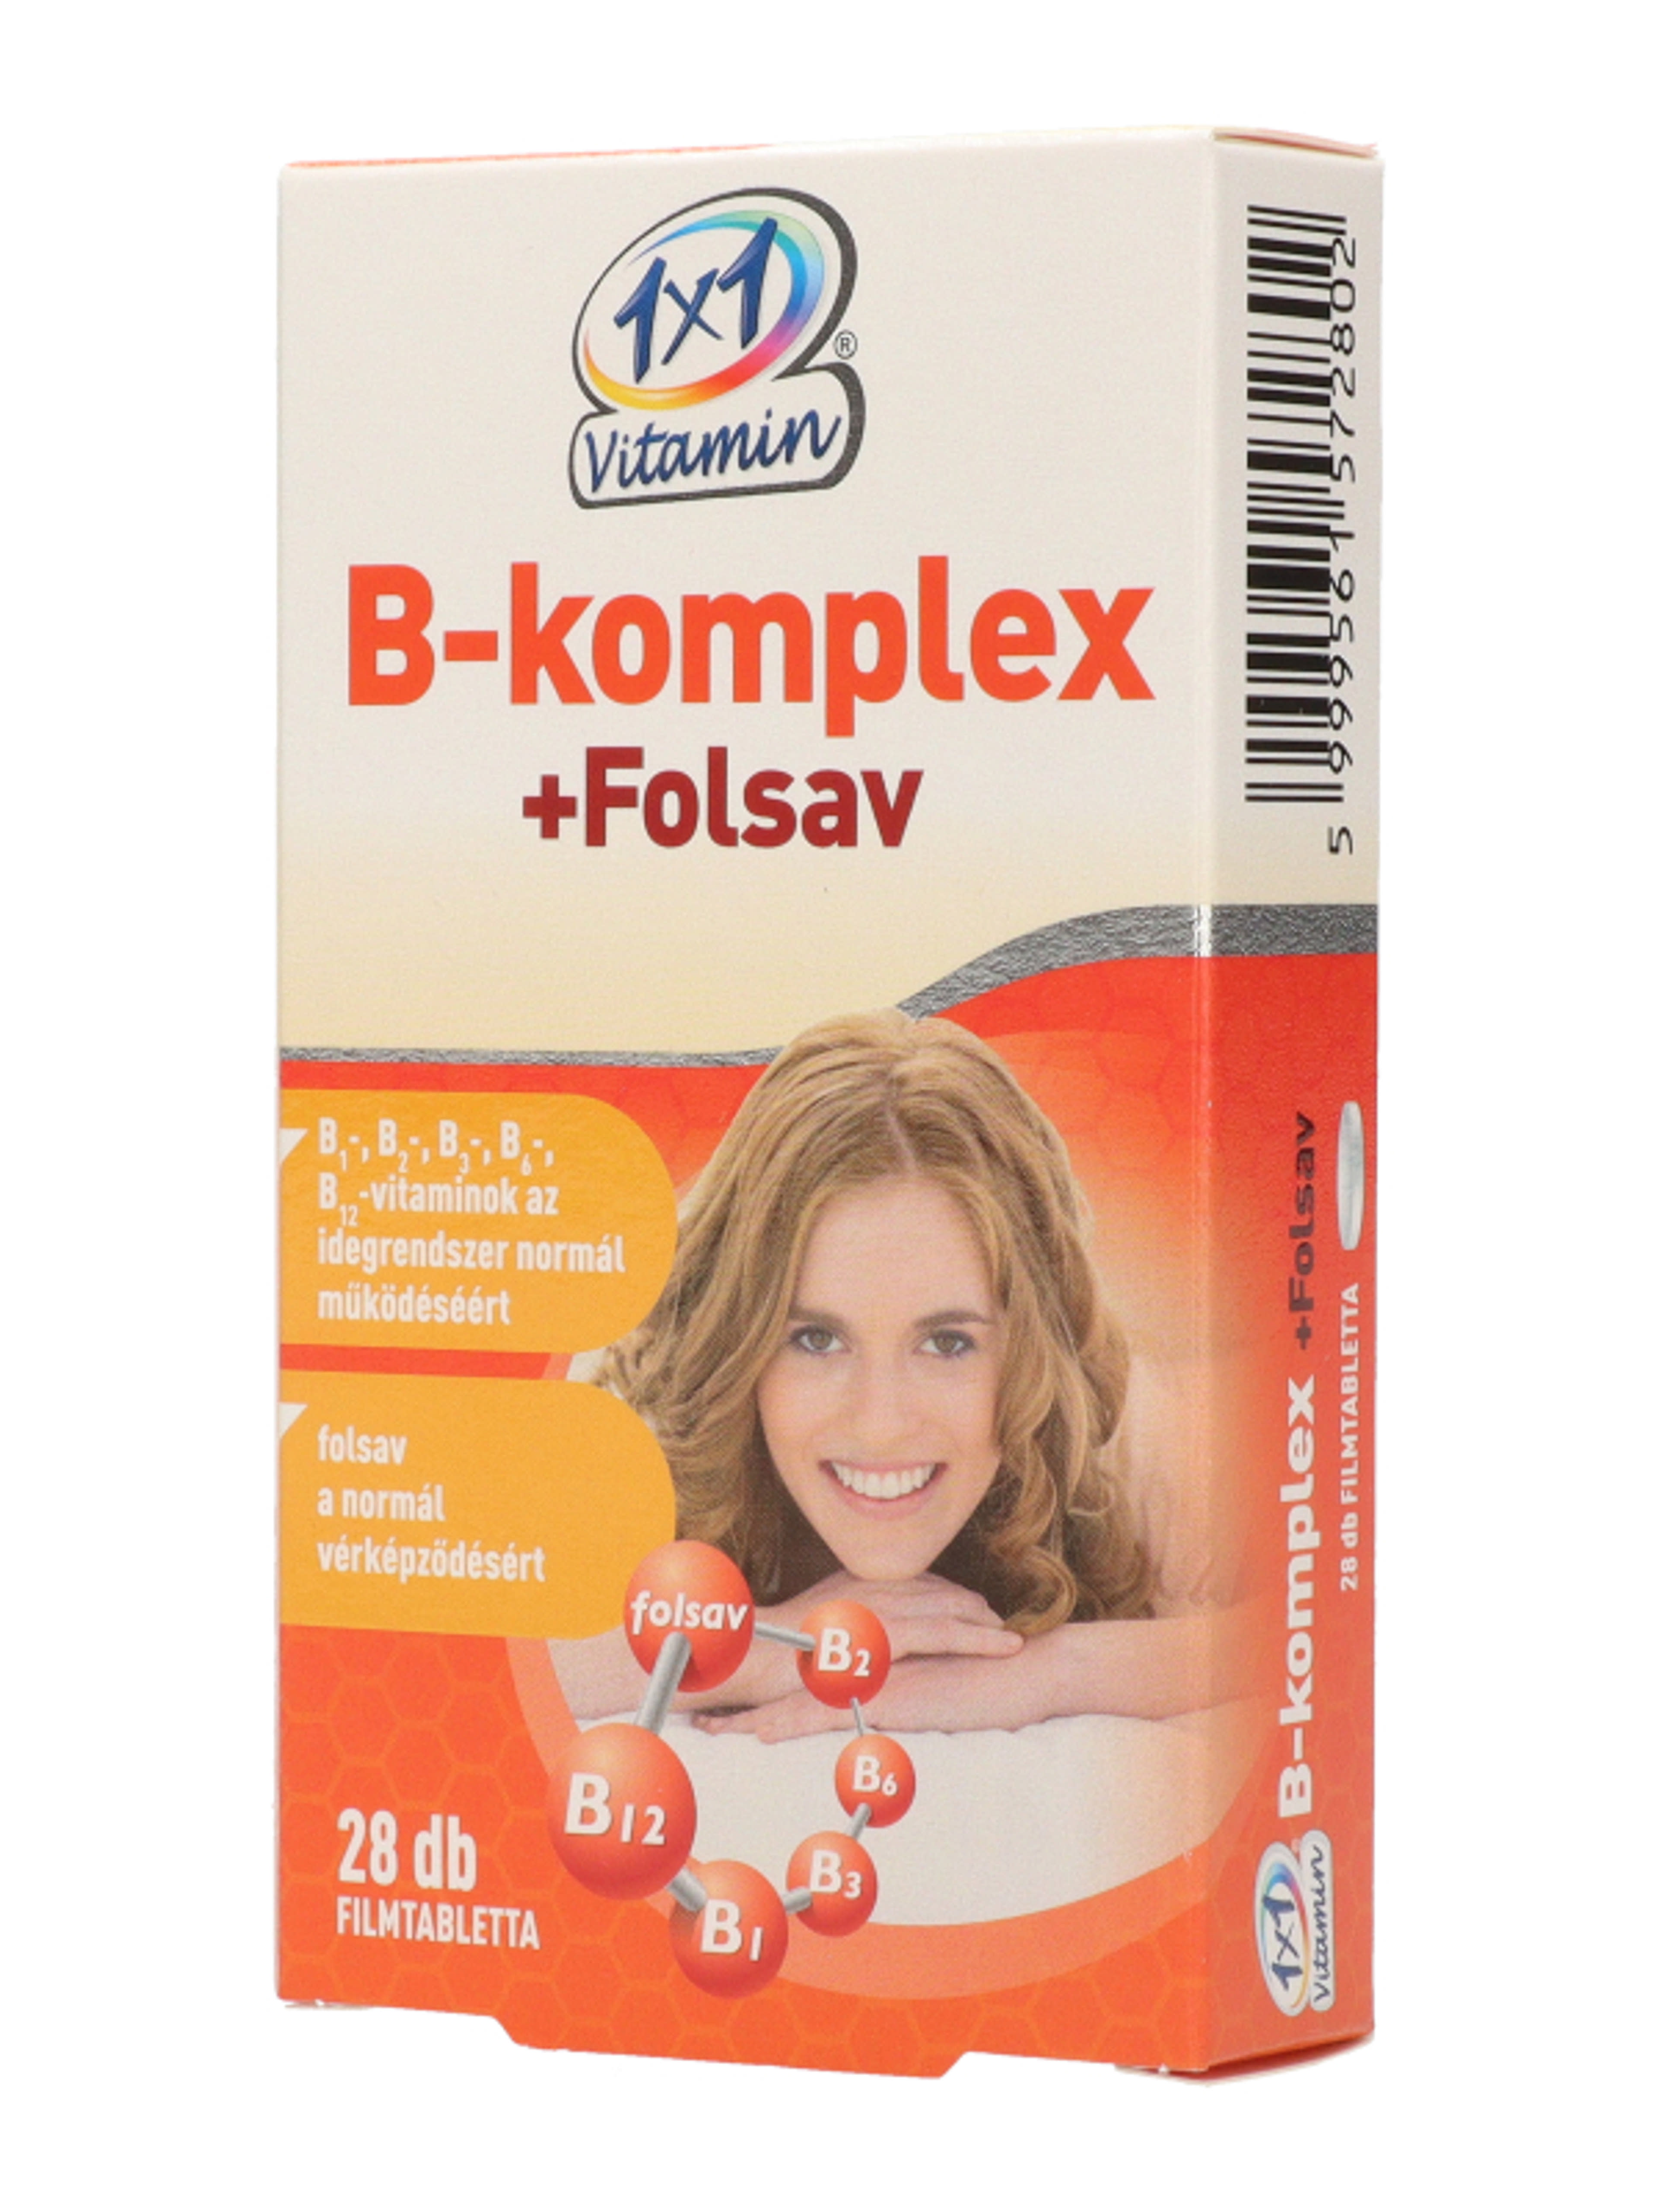 1×1 Vitamin B-komplex + folsav filmtabletta - 28 db-3